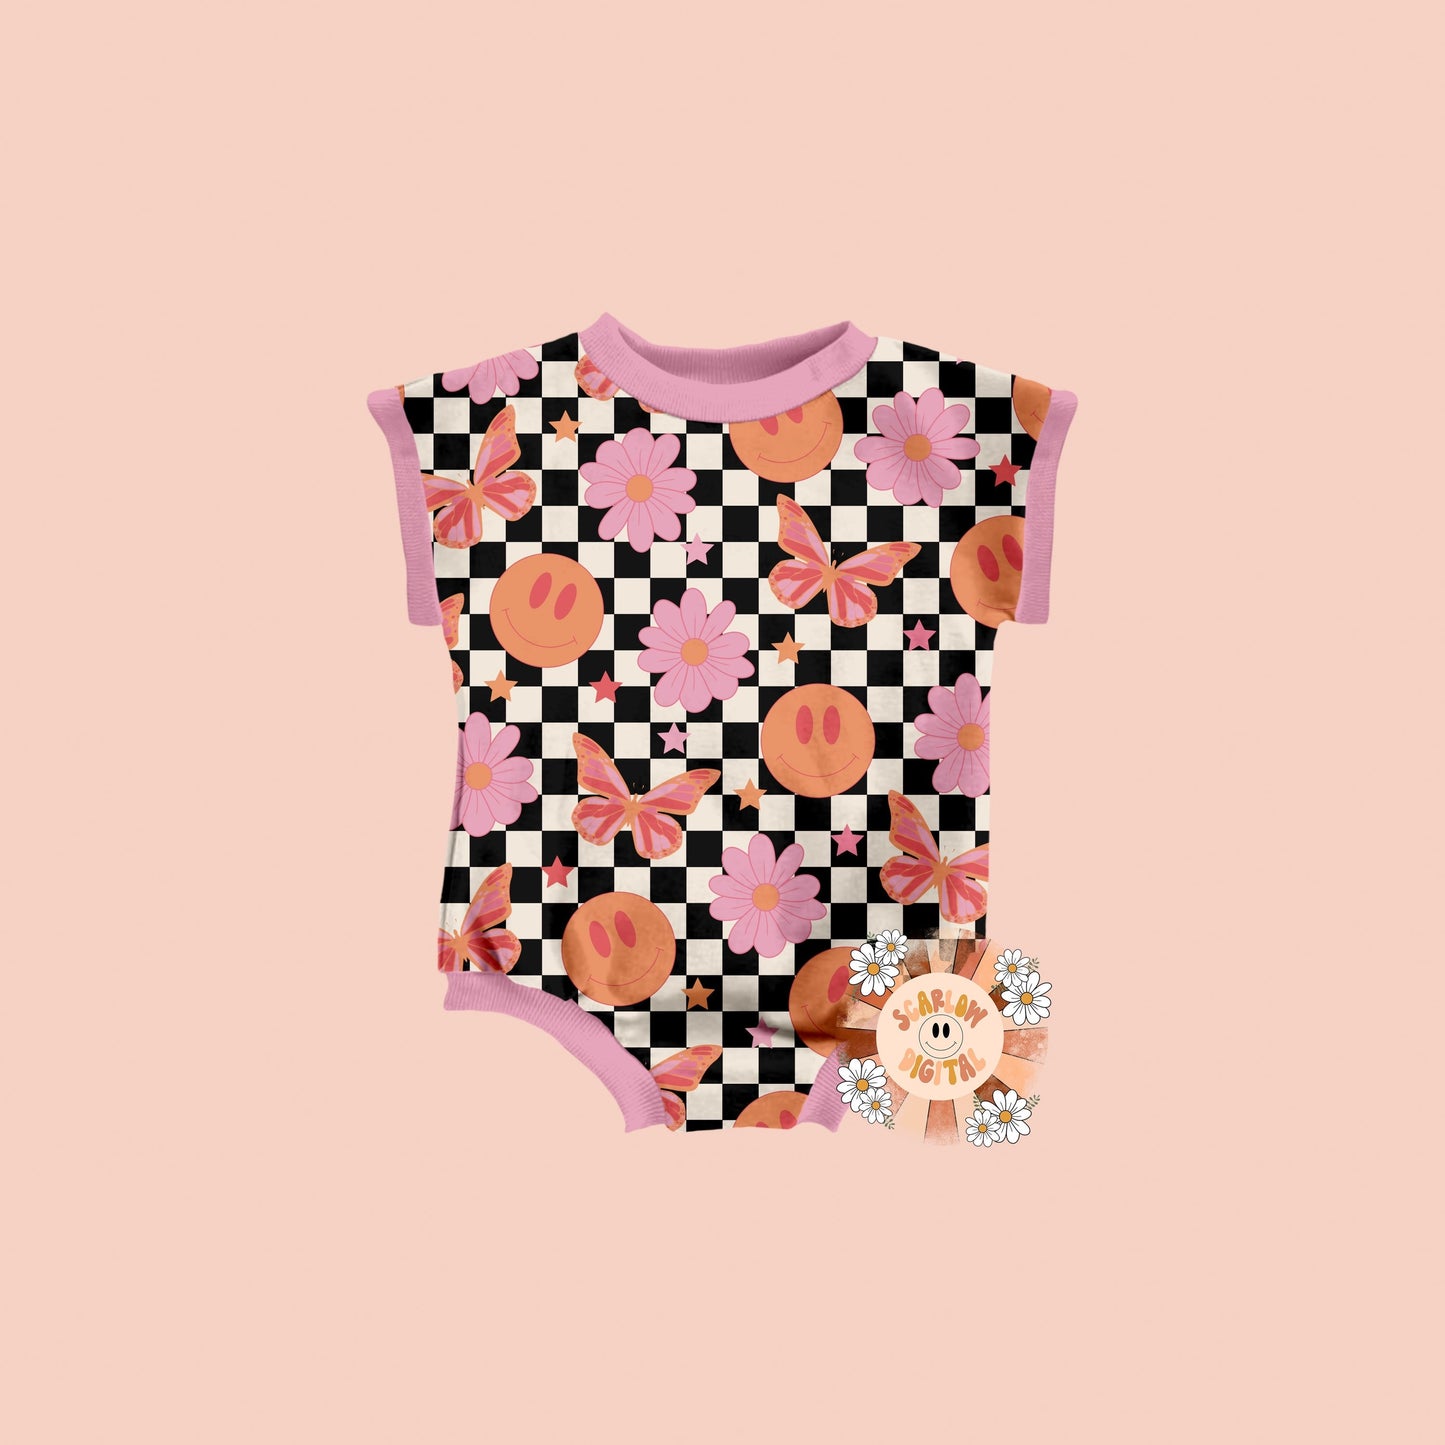 Rocker Girl Seamless Pattern-Retro Sublimation Digital Design Download-butterfly seamless pattern, smiling sublimation, retro seamless